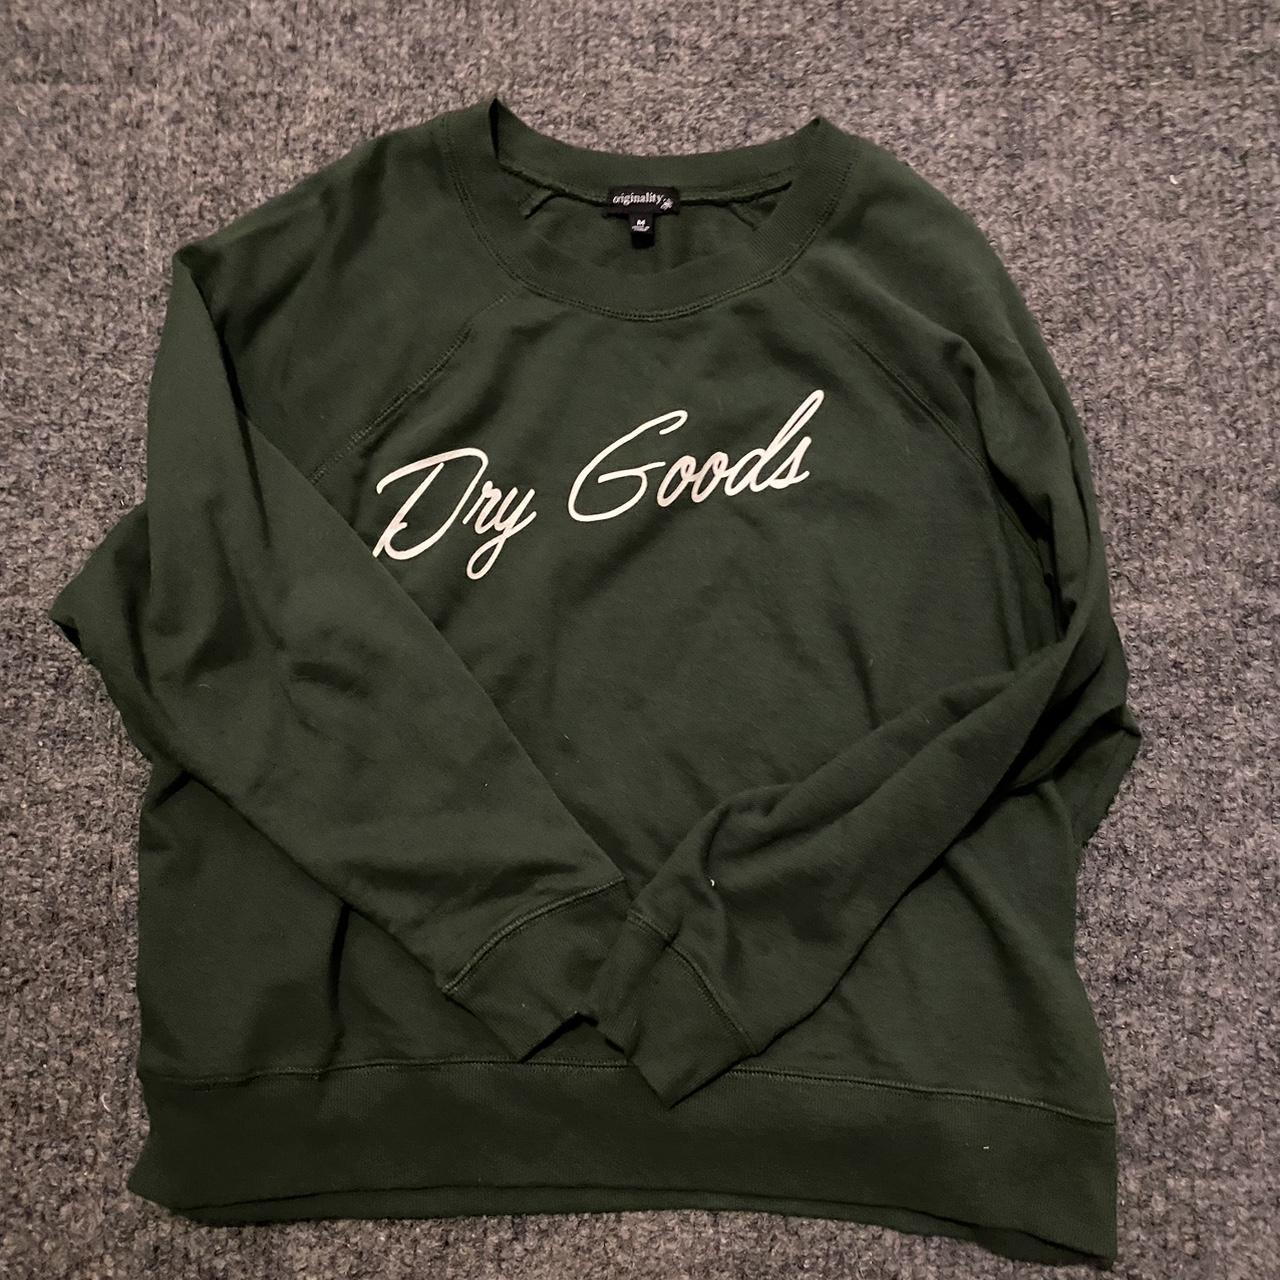 Dry Goods Long Sleeve Top - Green